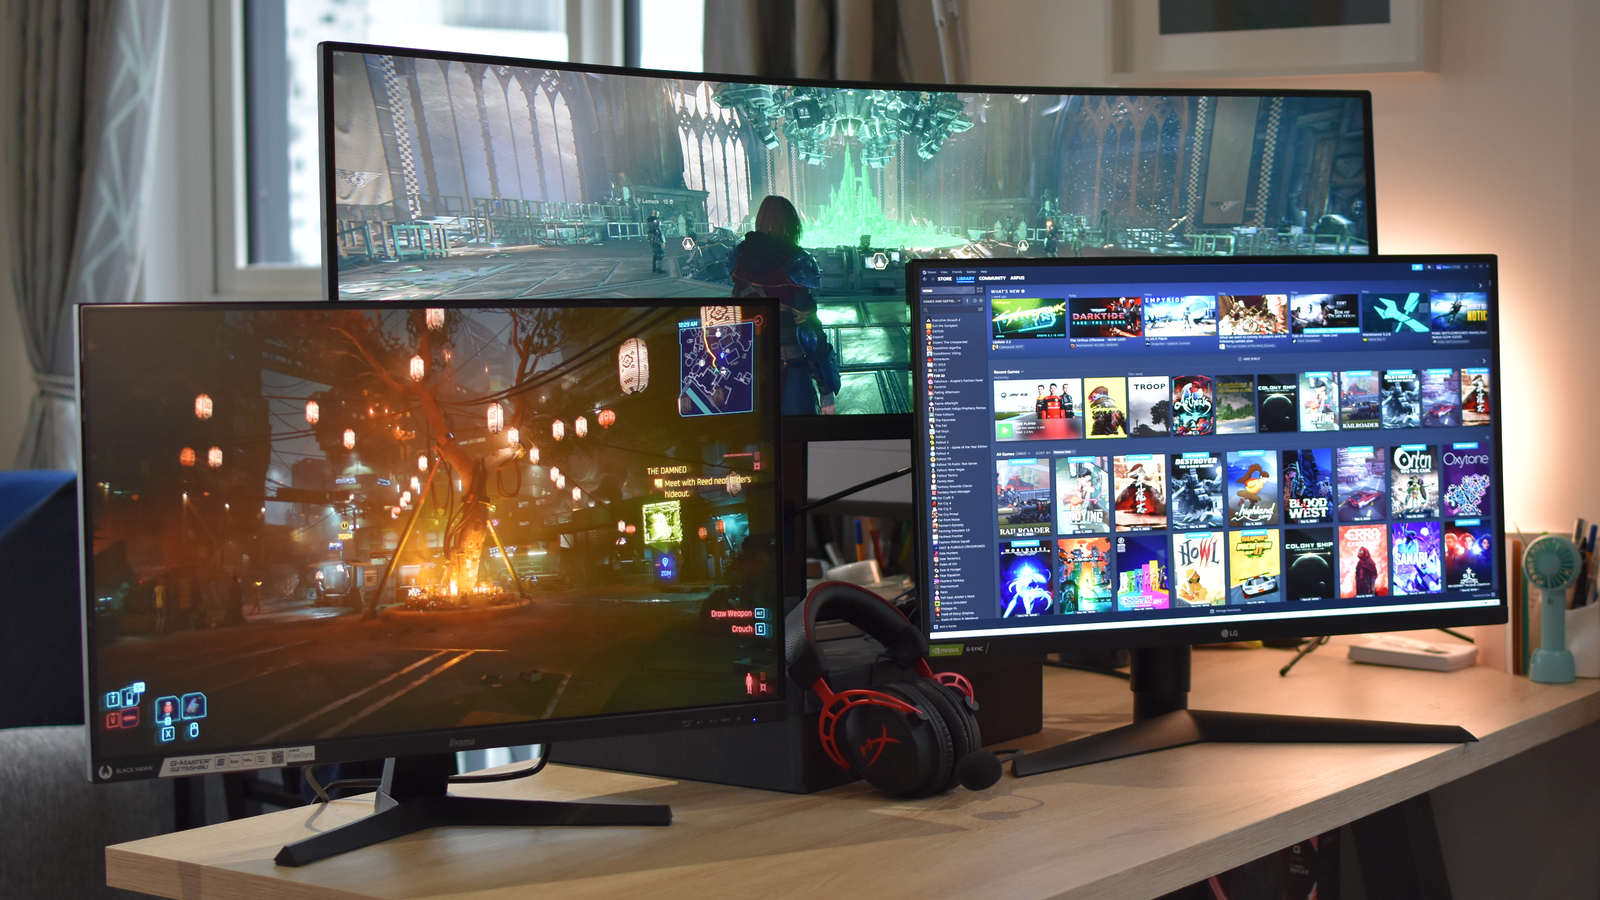 AOC U28G2XU review: The cheapest 144Hz 4K IPS gaming monitor! 